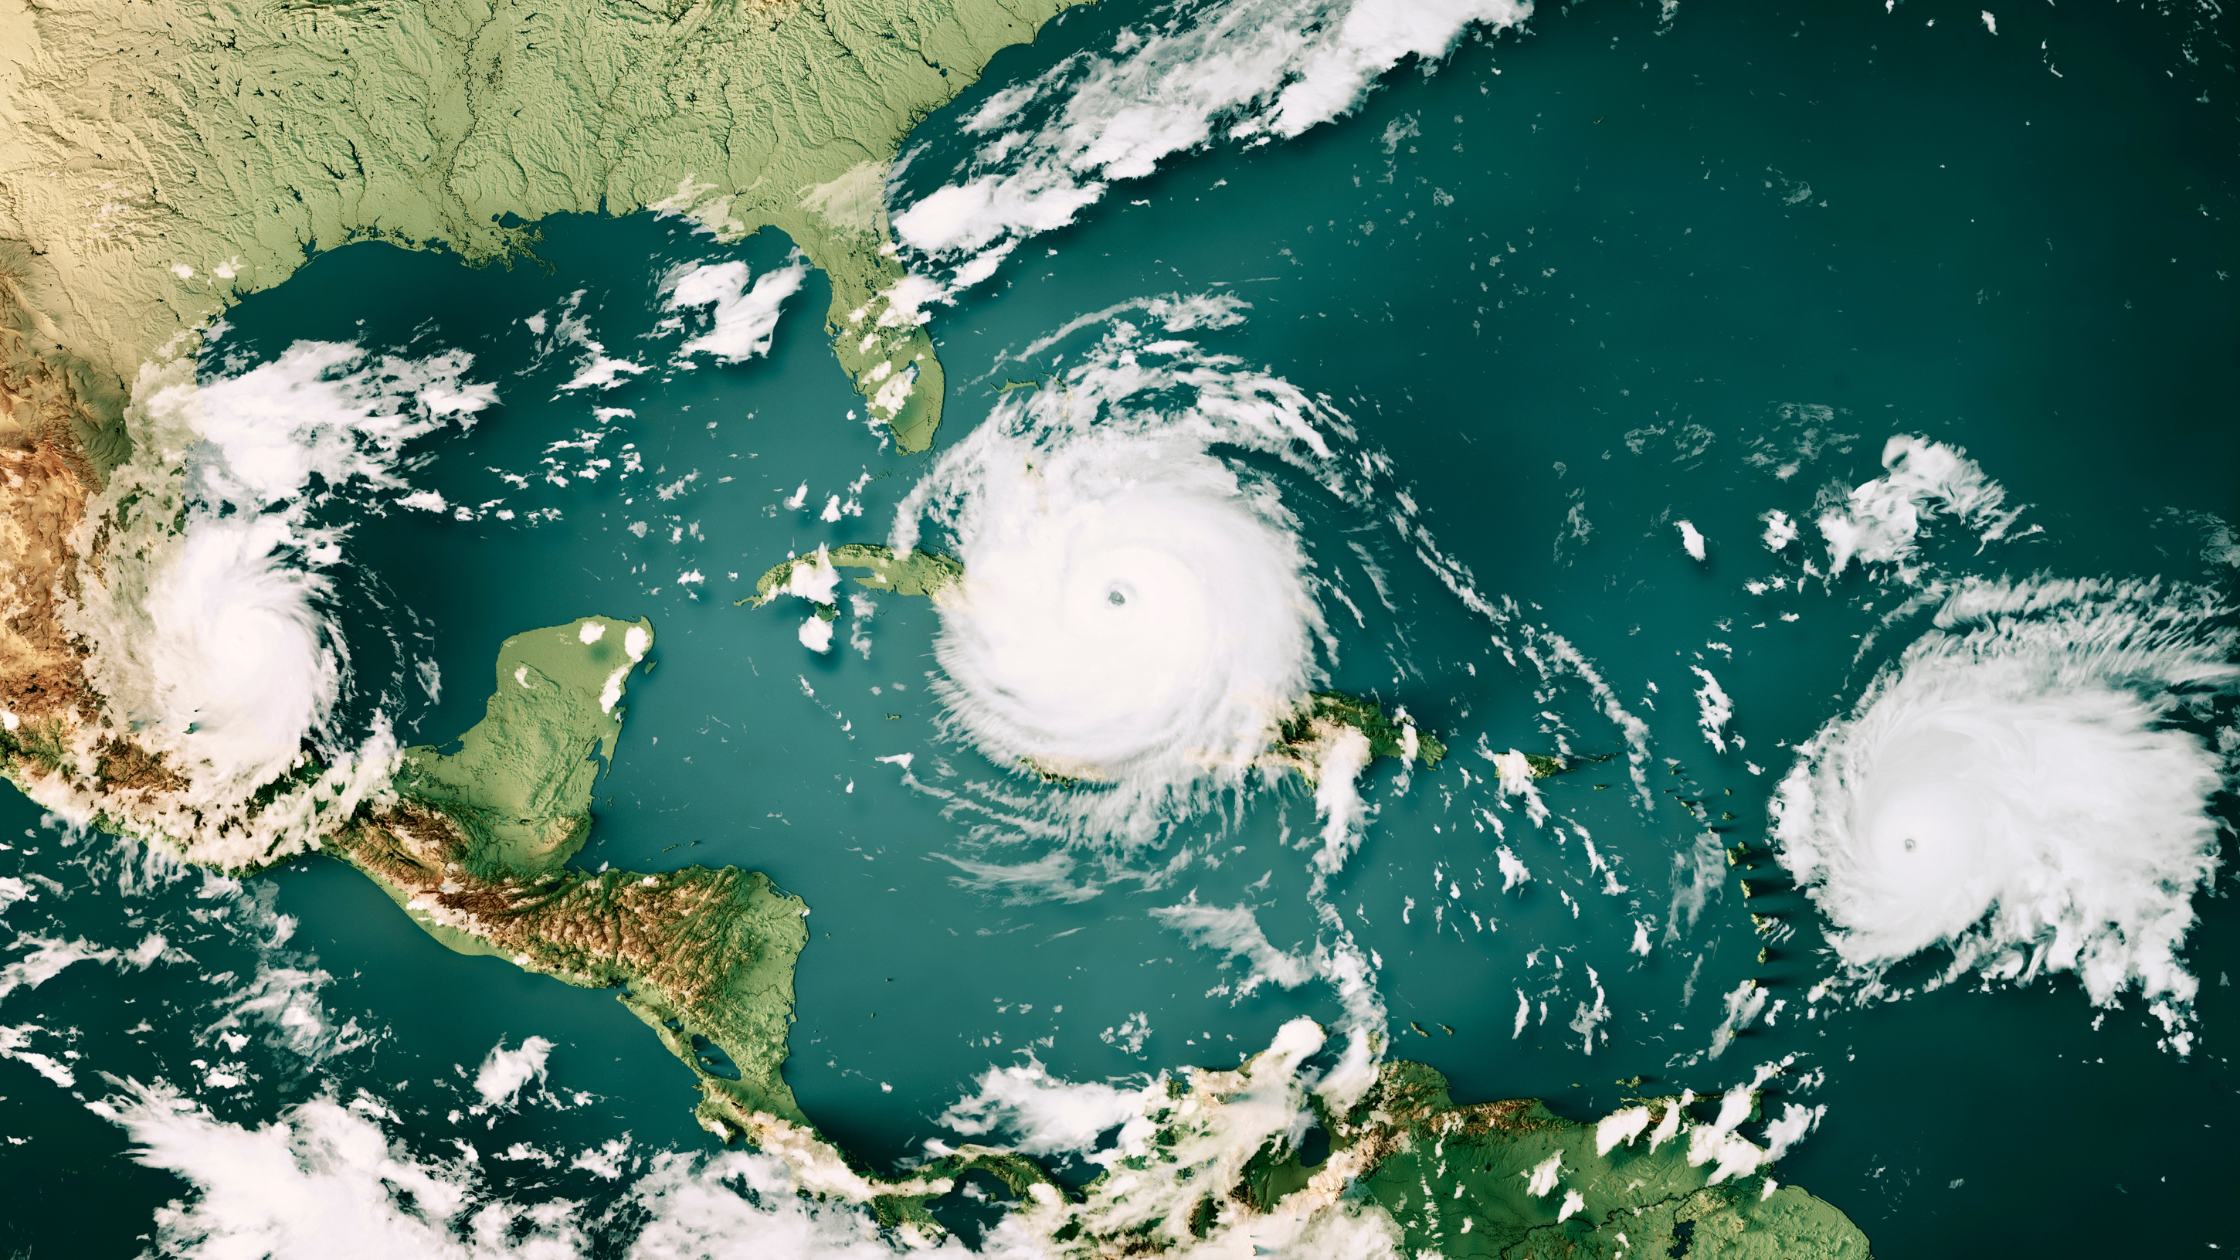 Three Major Hurricanes on a single day: Hurricane Katia, Hurricane Irma and Hurricane Jose (from left to right).